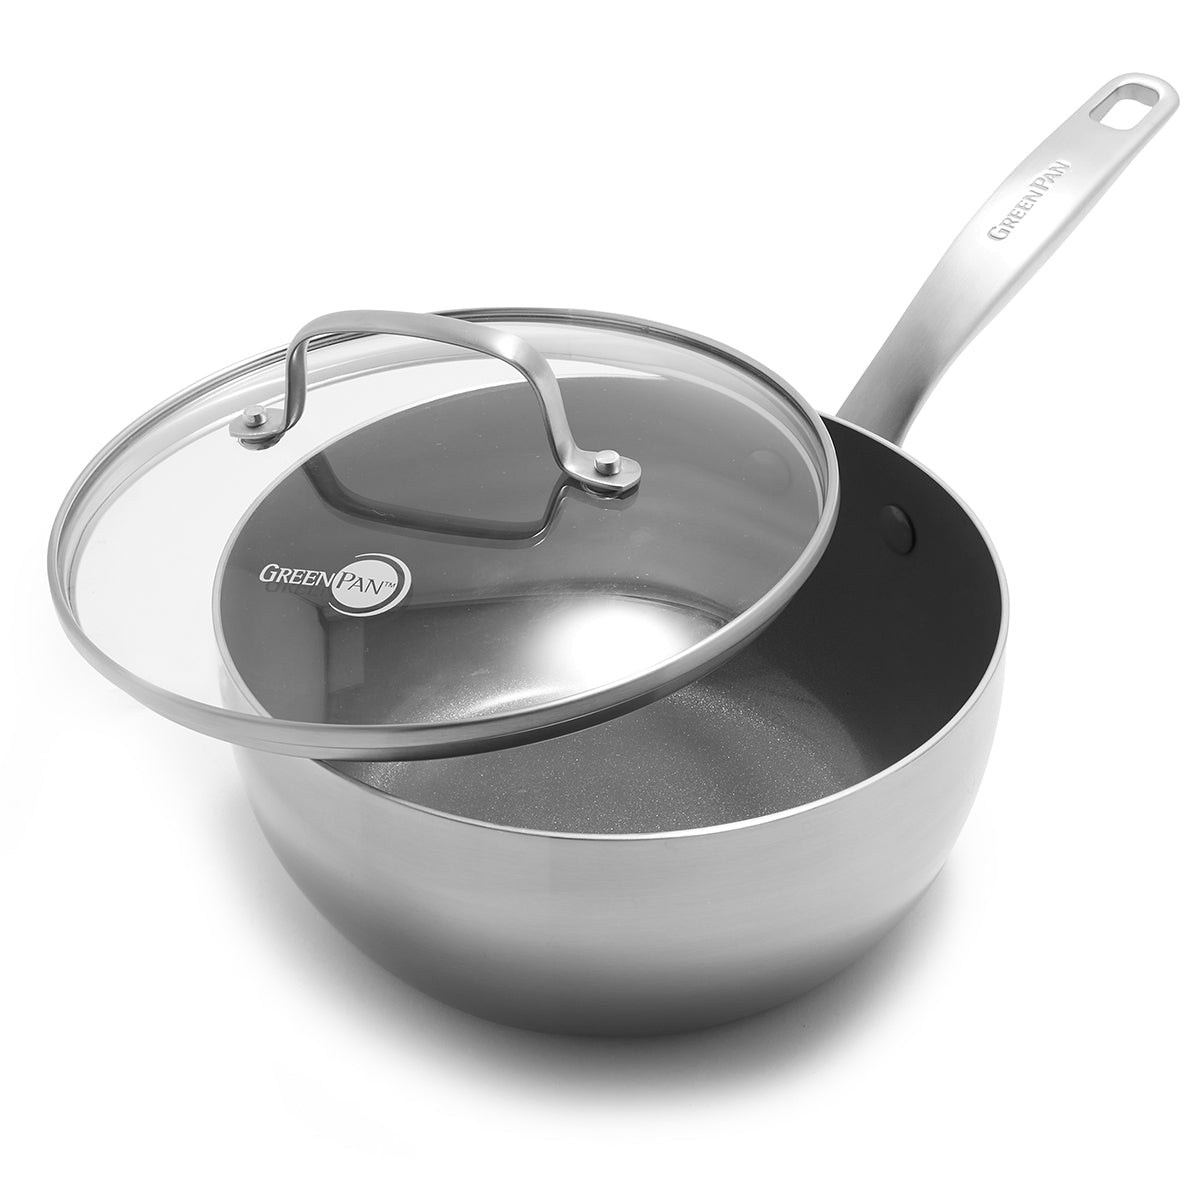 Better Chef 2-Quart Aluminum Saucepan With Glass Lid - Gray, Non